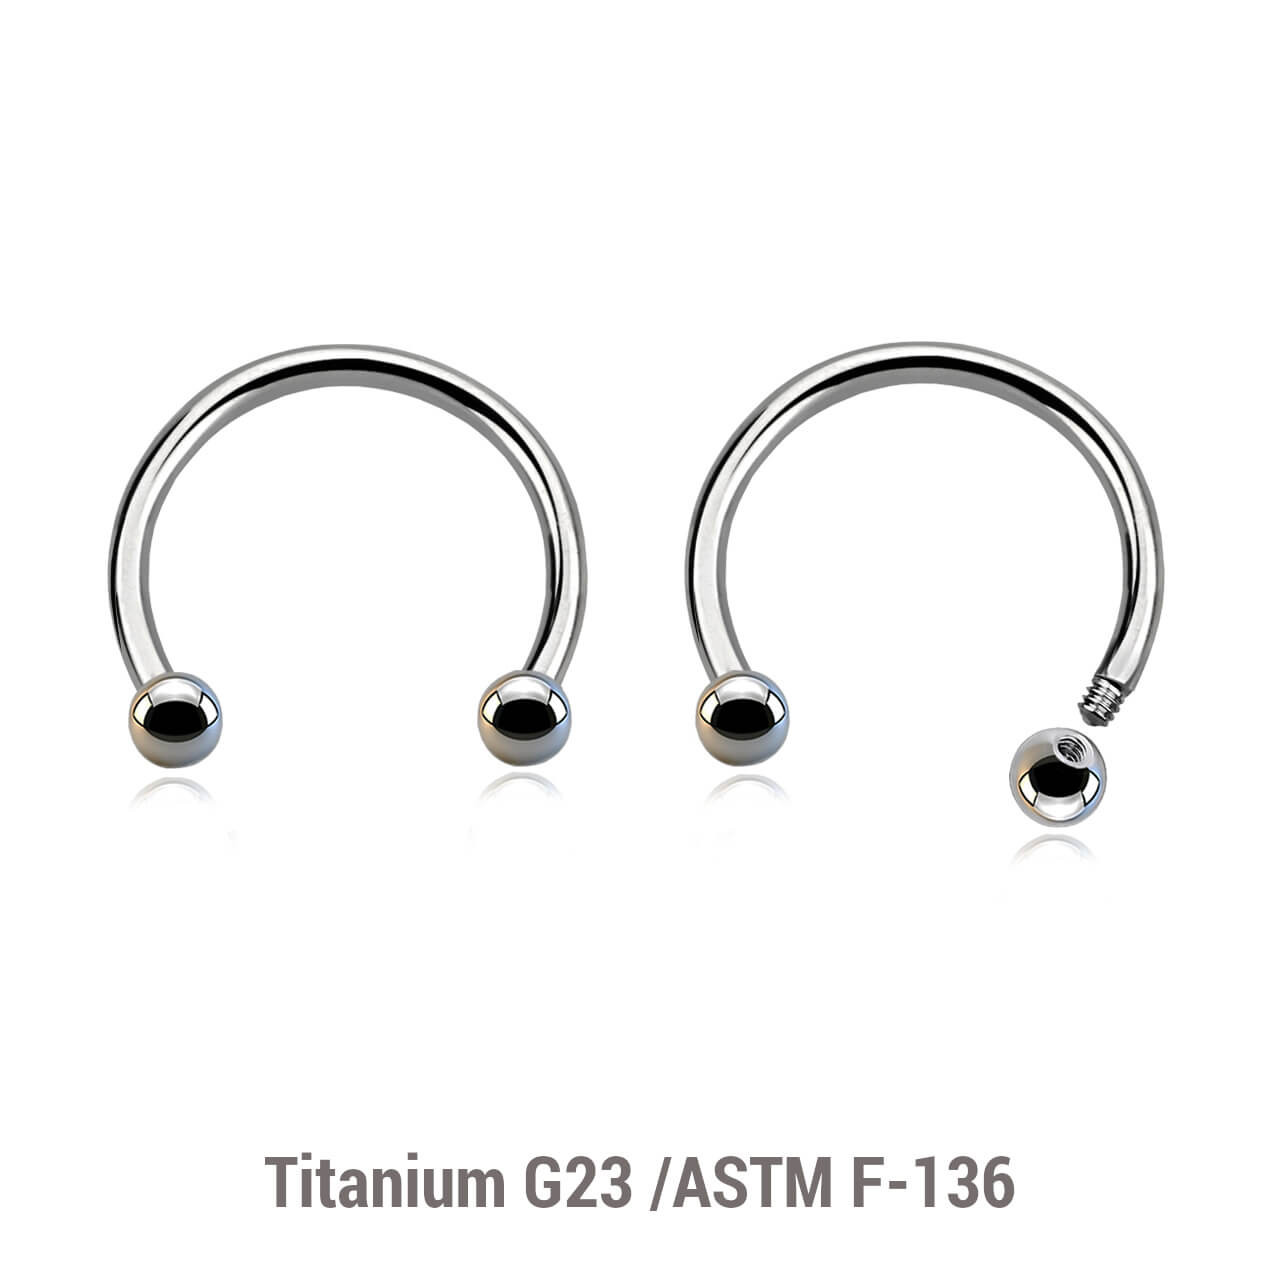 TCB12B25 Wholesale Pack of 10 high polished titanium G23 horseshoe circular barbells, Thickness 1.2mm, Ball size 2.5mm